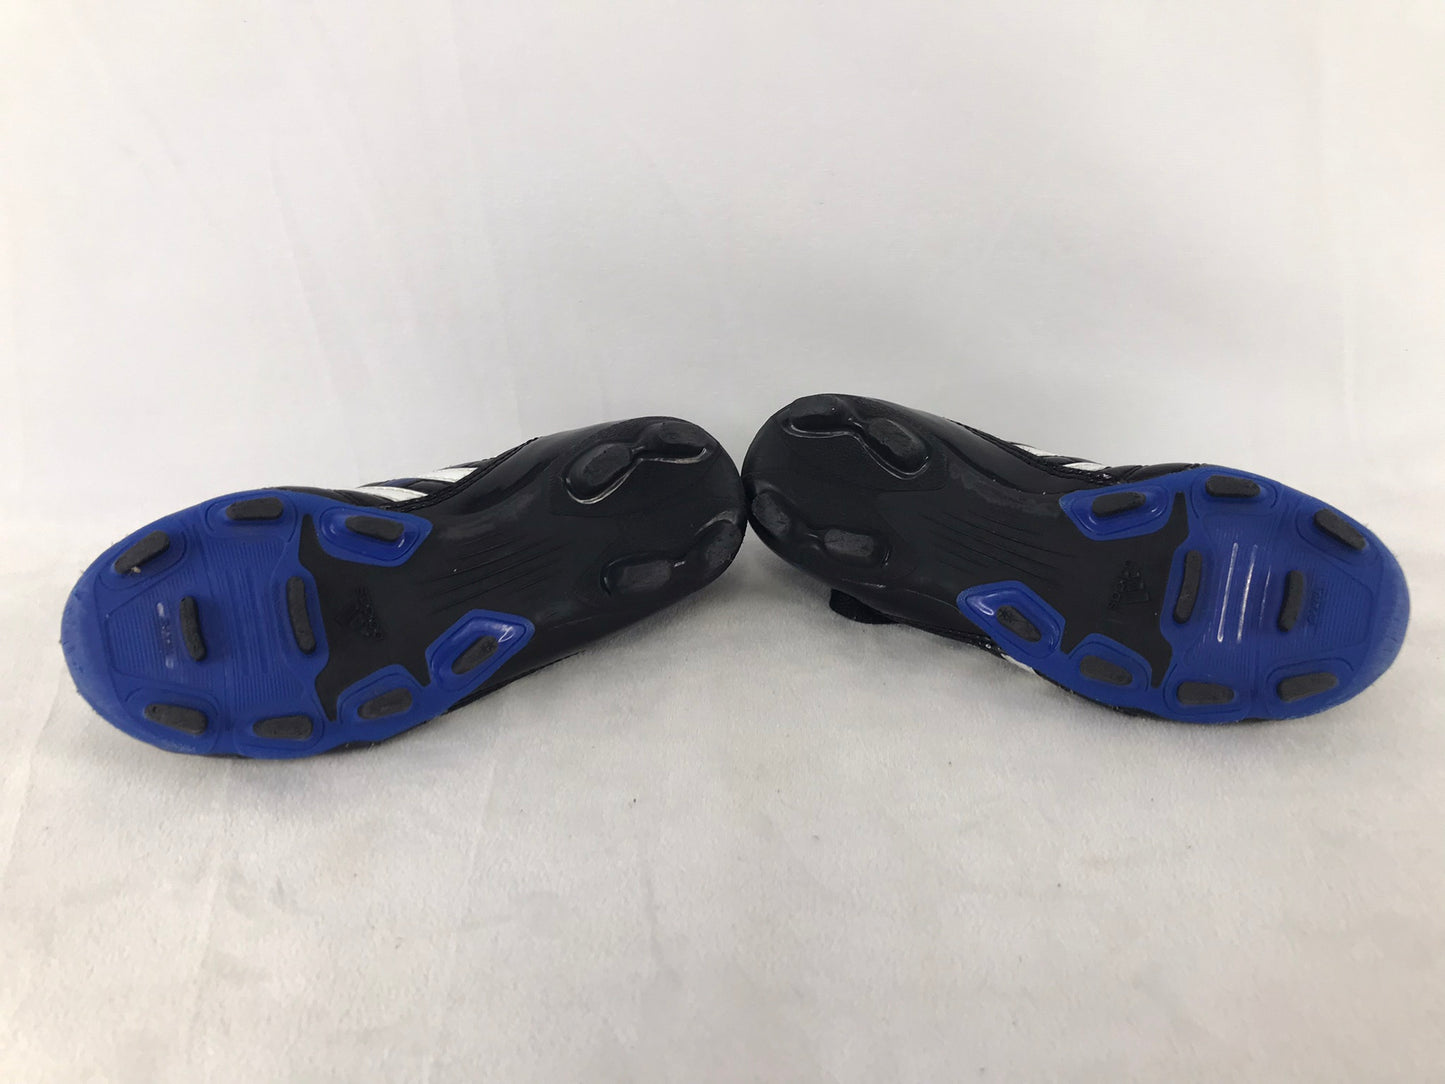 Soccer Shoes Cleats Child Size 11 Adidas Blue Black Excellent